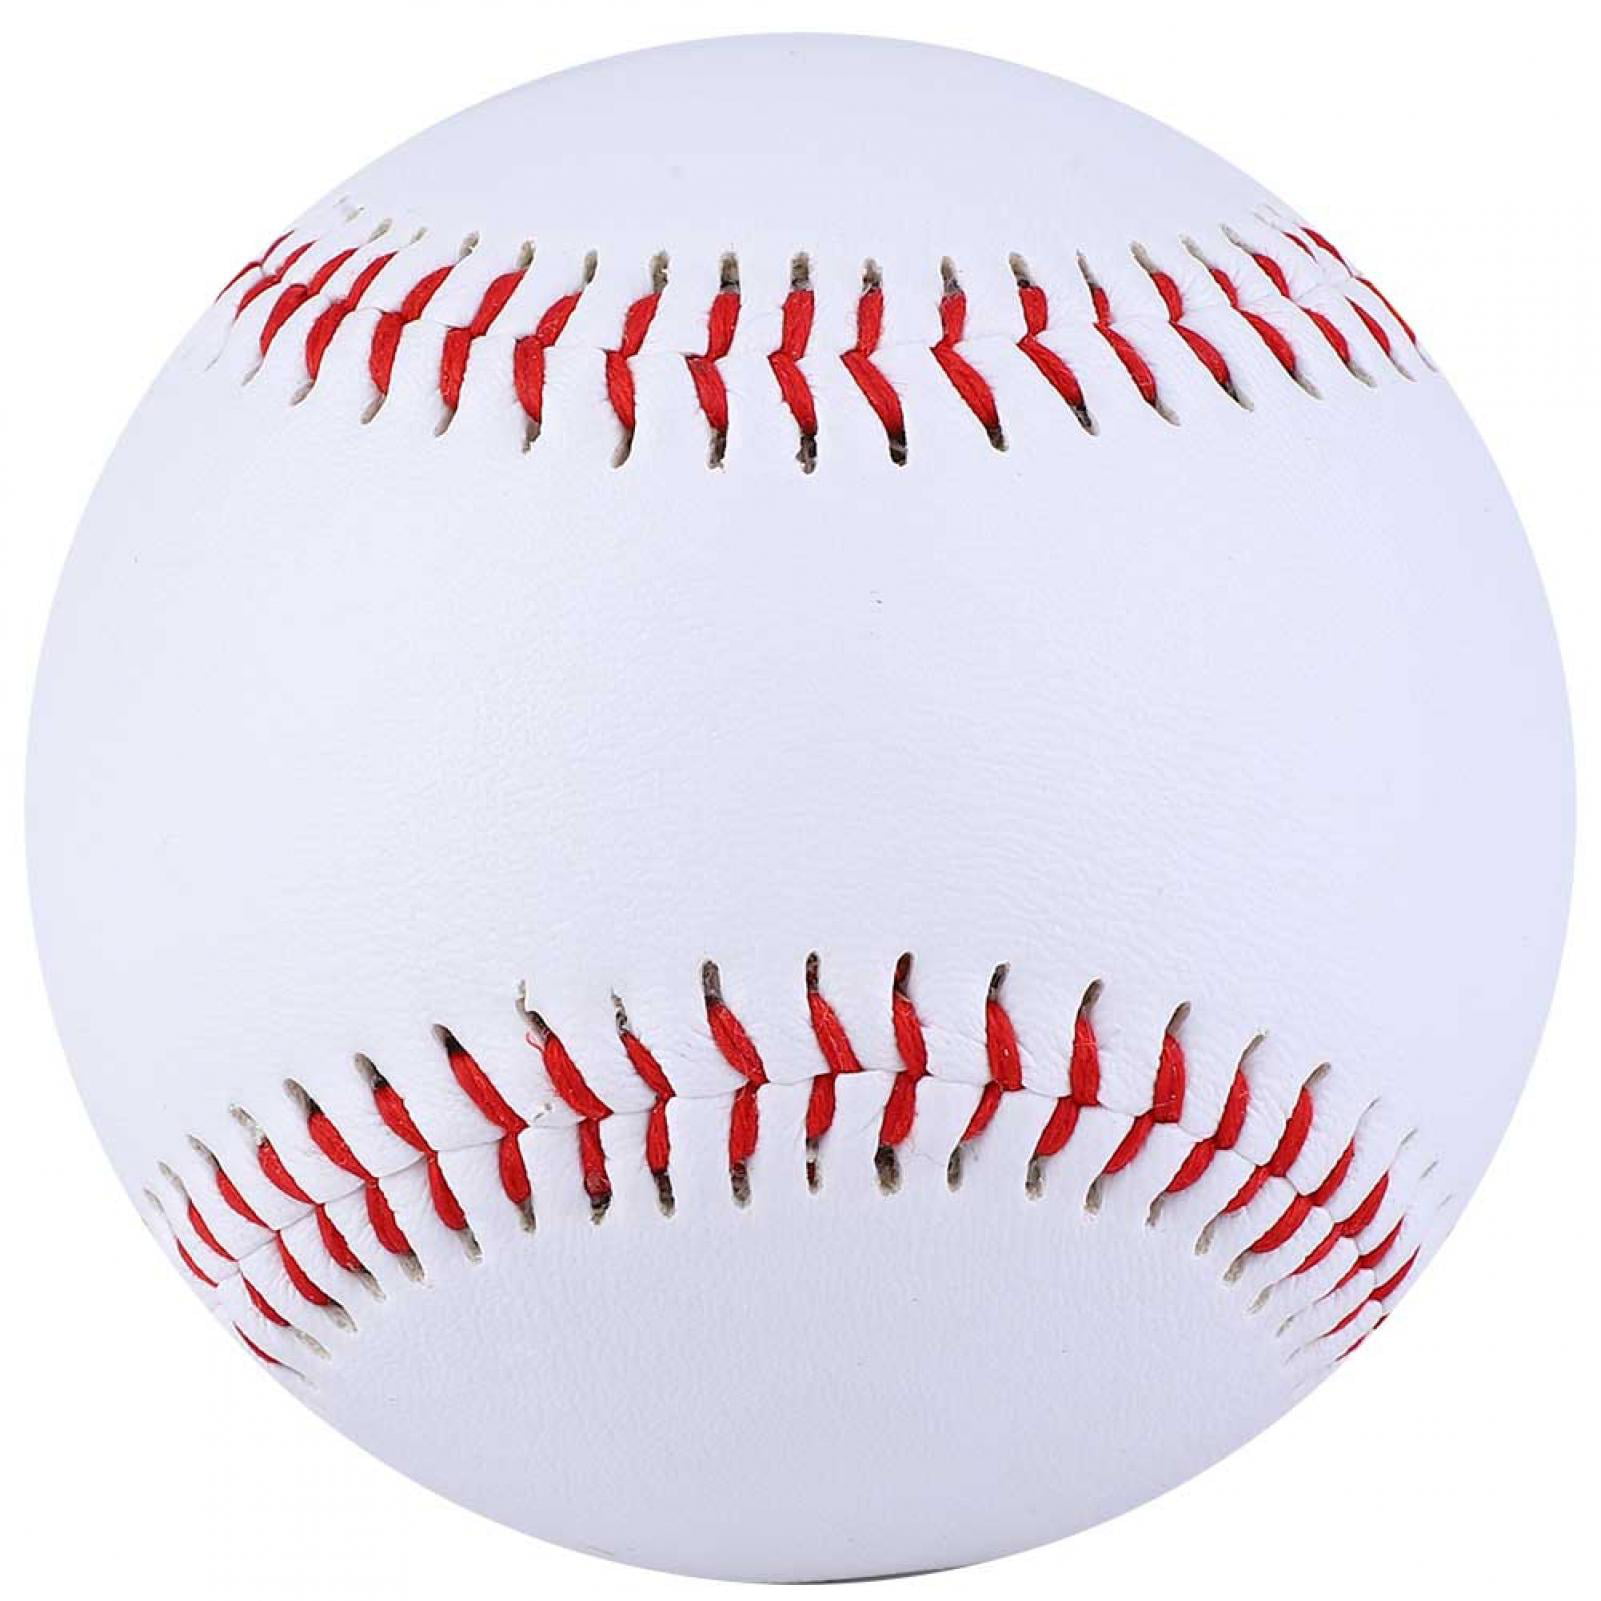 9" PVC Soft Leather Sports Game Practice Training Base Ball Softball BaseBall C 